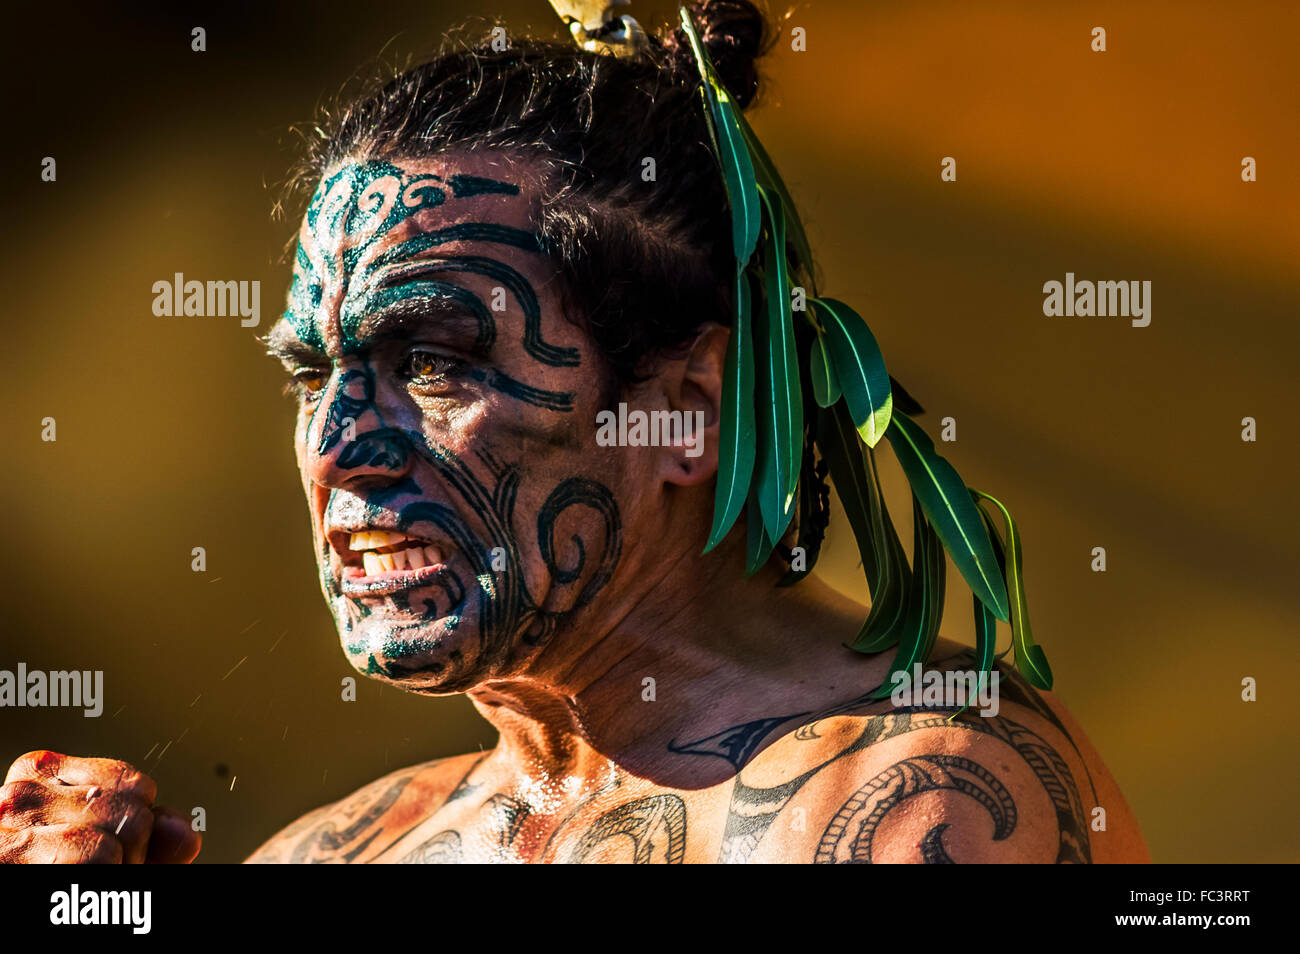 cerca-de-un-macho-feroz-la-cara-pintada-con-pintura-de-guerra-haciendo-el-ejecutante-maori-haka-danza-de-guerra-en-el-festival-de-melbourne-australia-fc3rrt.jpg